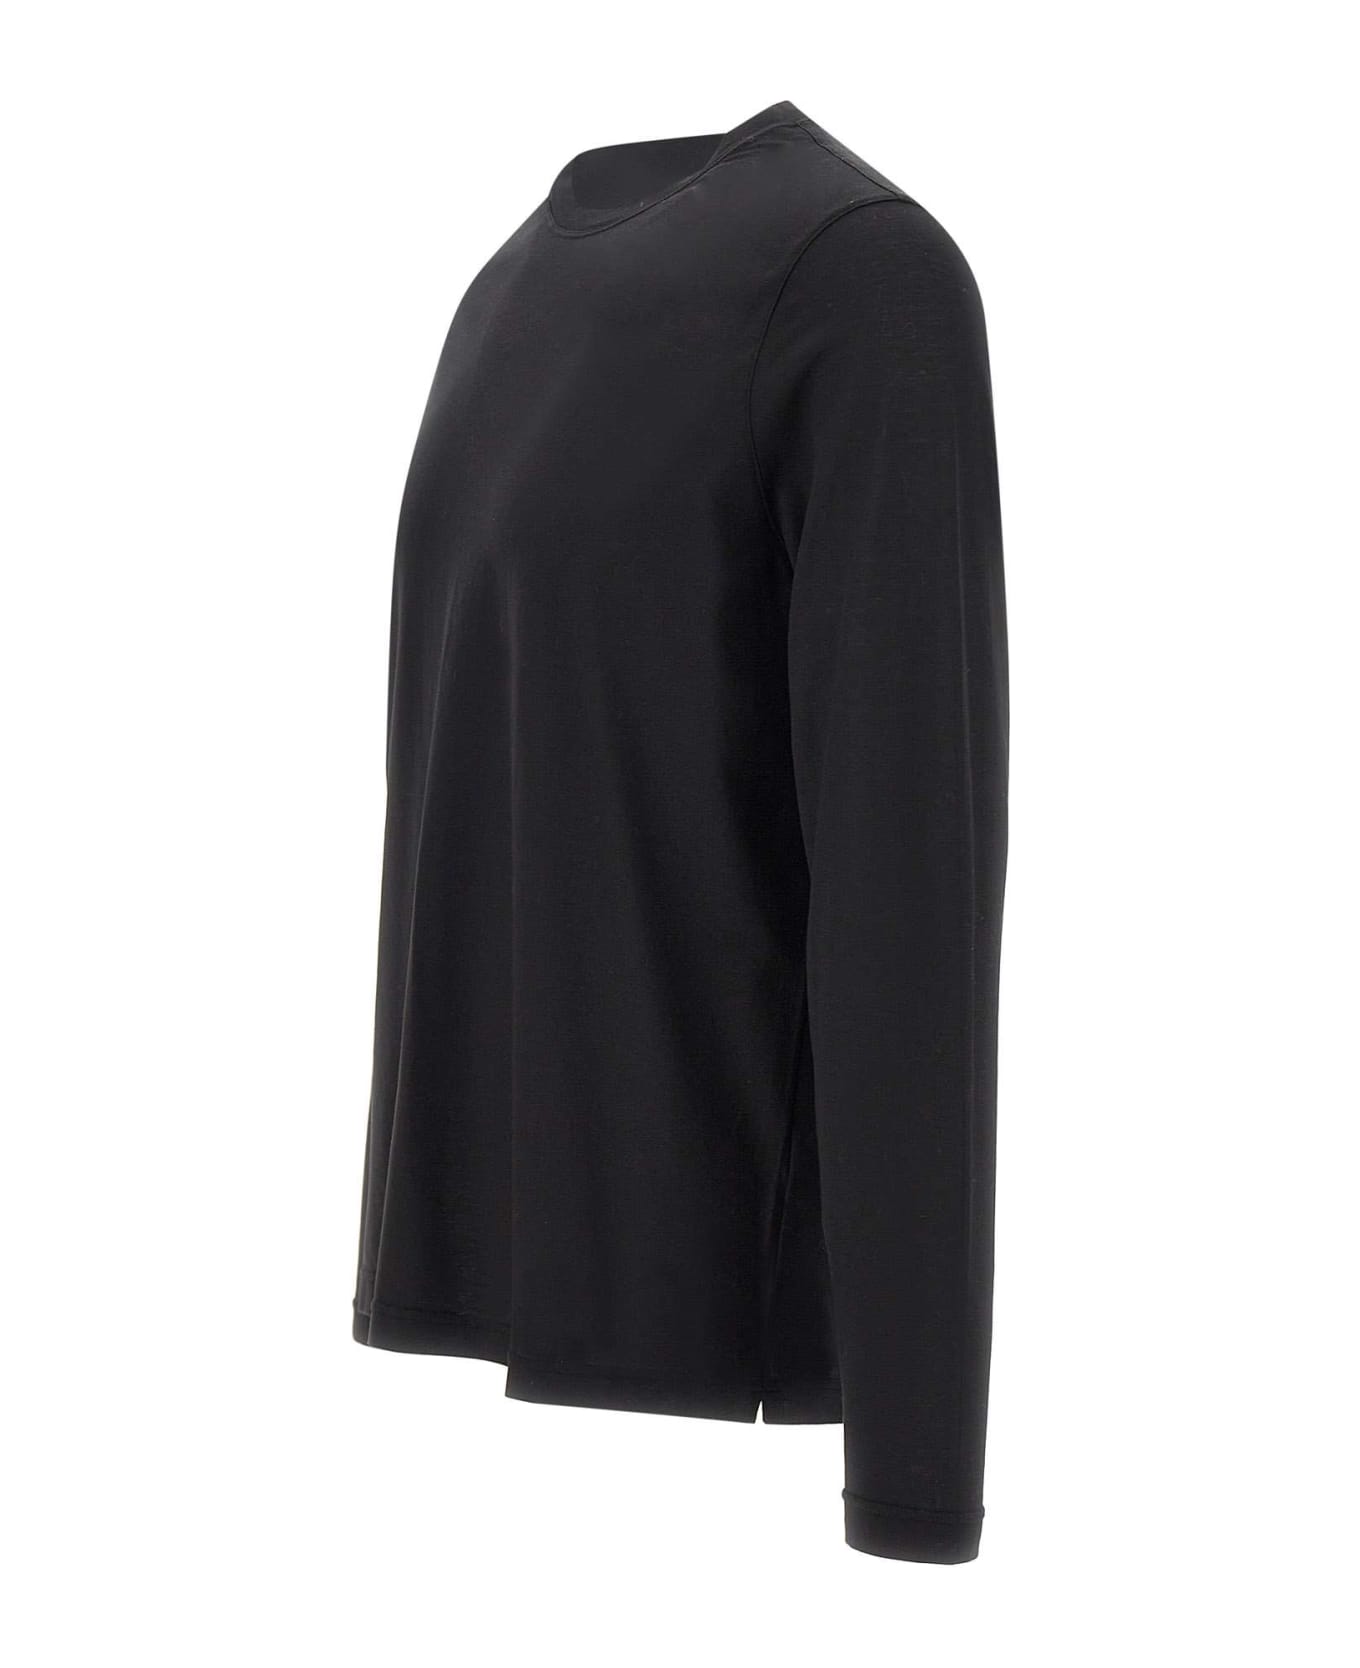 Filippo De Laurentiis Cotton Crepe Sweater - BLACK